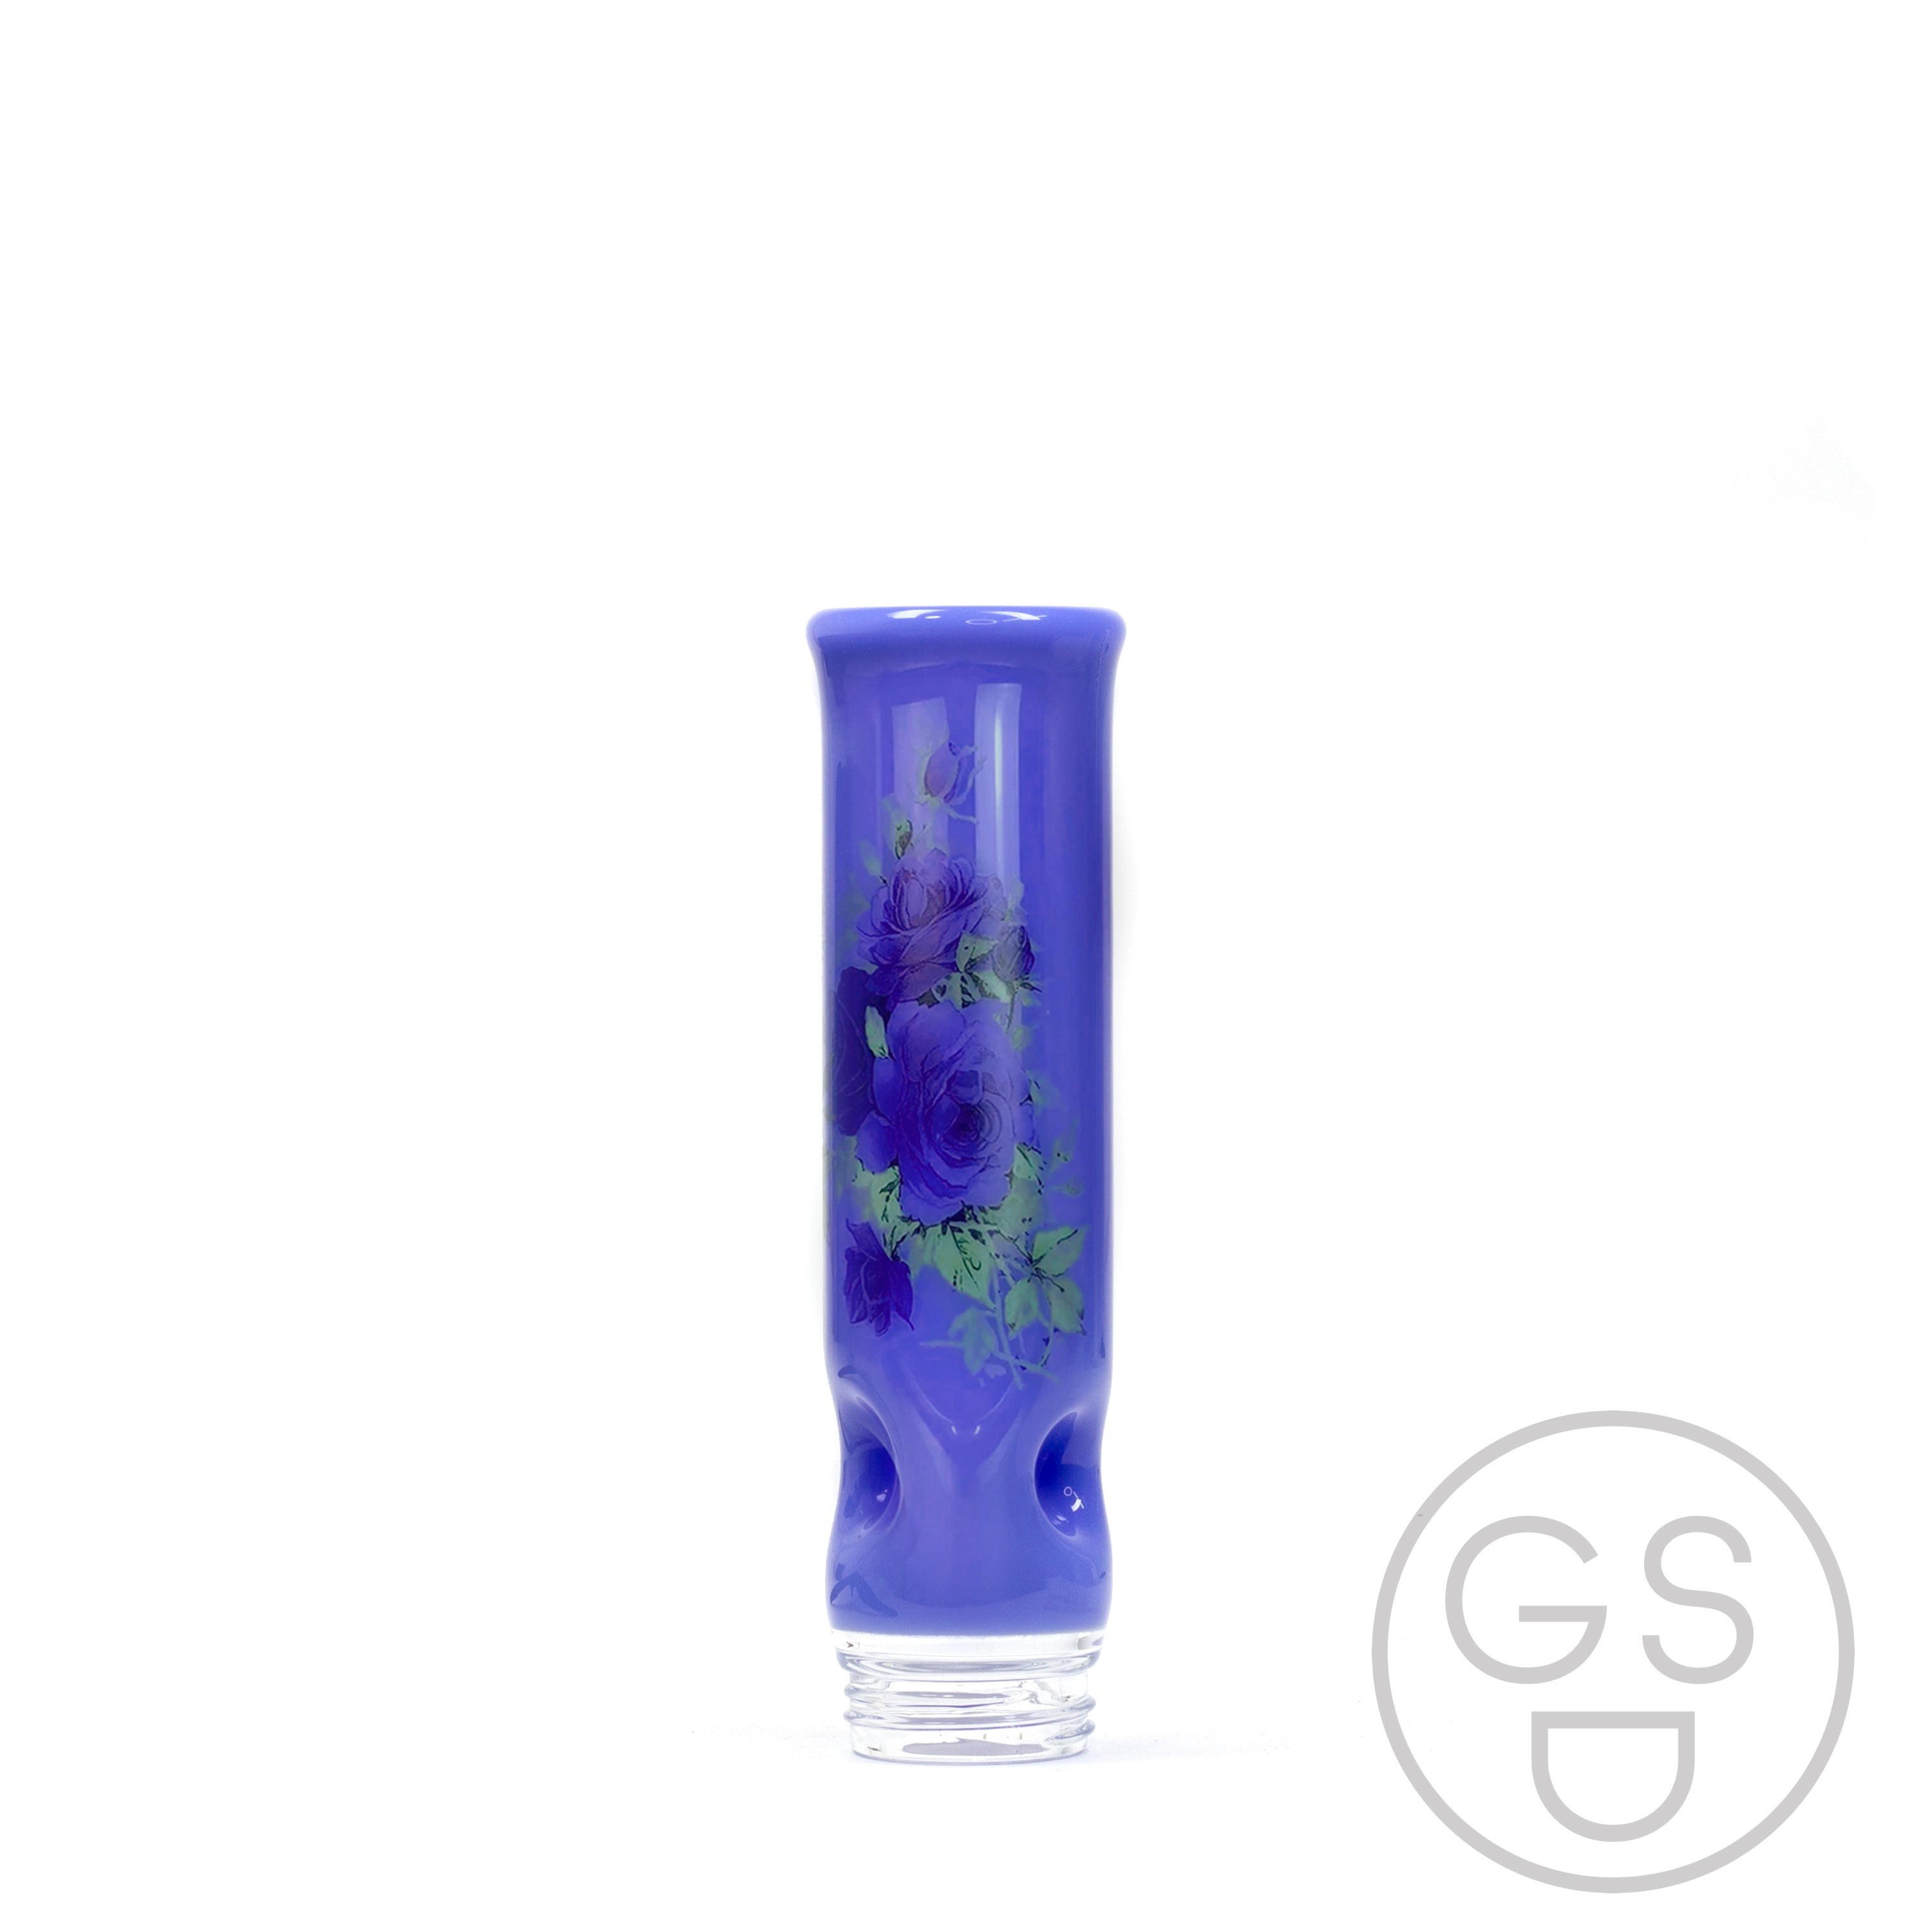 Prism Modular Waterpipe Standard Mouthpiece - Moonlight Rose / Blueberry